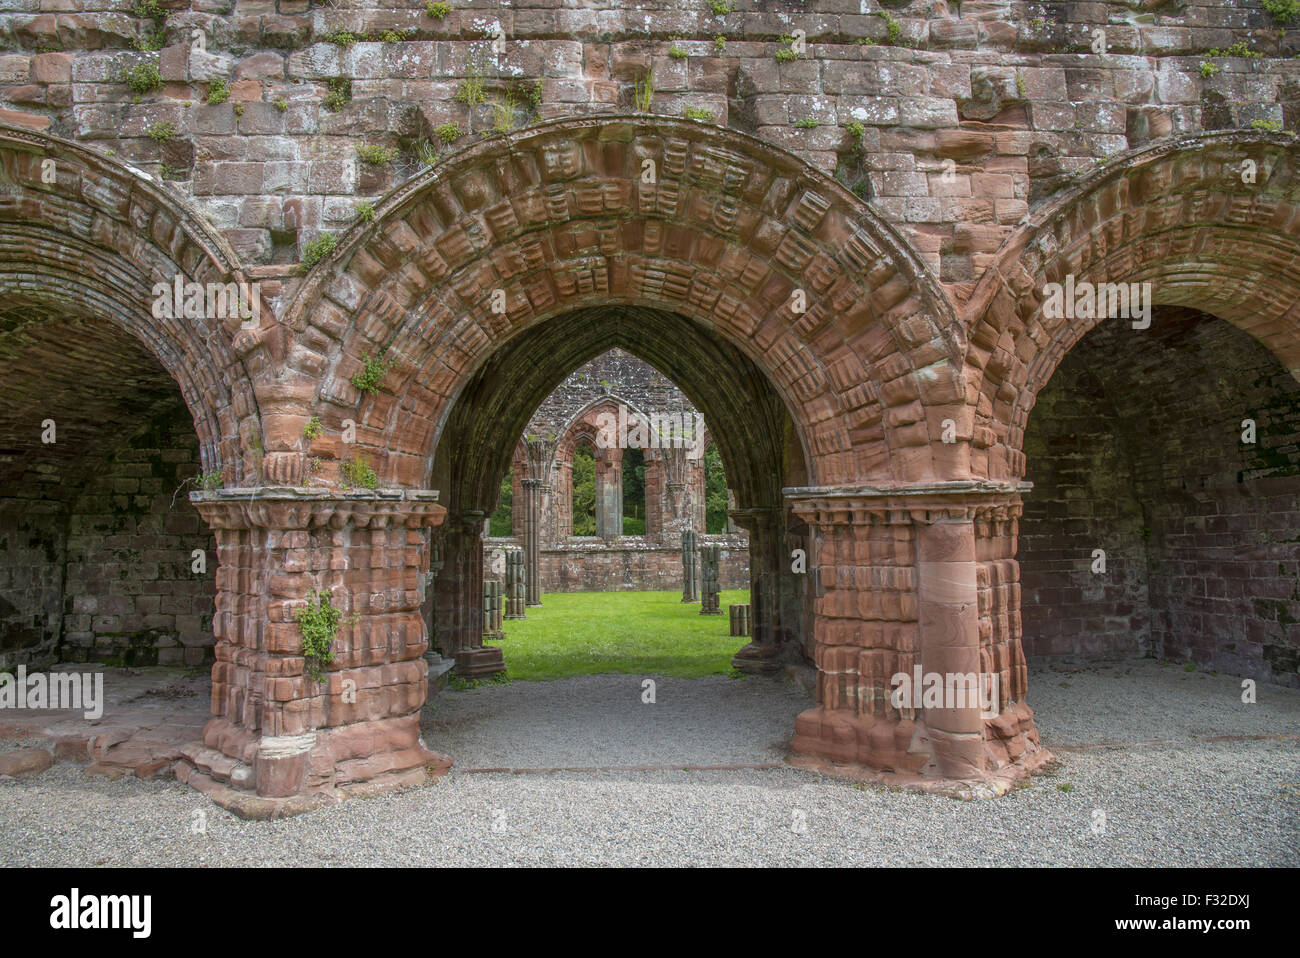 Dans Archway monastère cistercienne, l'abbaye de Furness (St. Marie de Furness), Barrow-in-Furness, Cumbria, Angleterre, juin Banque D'Images